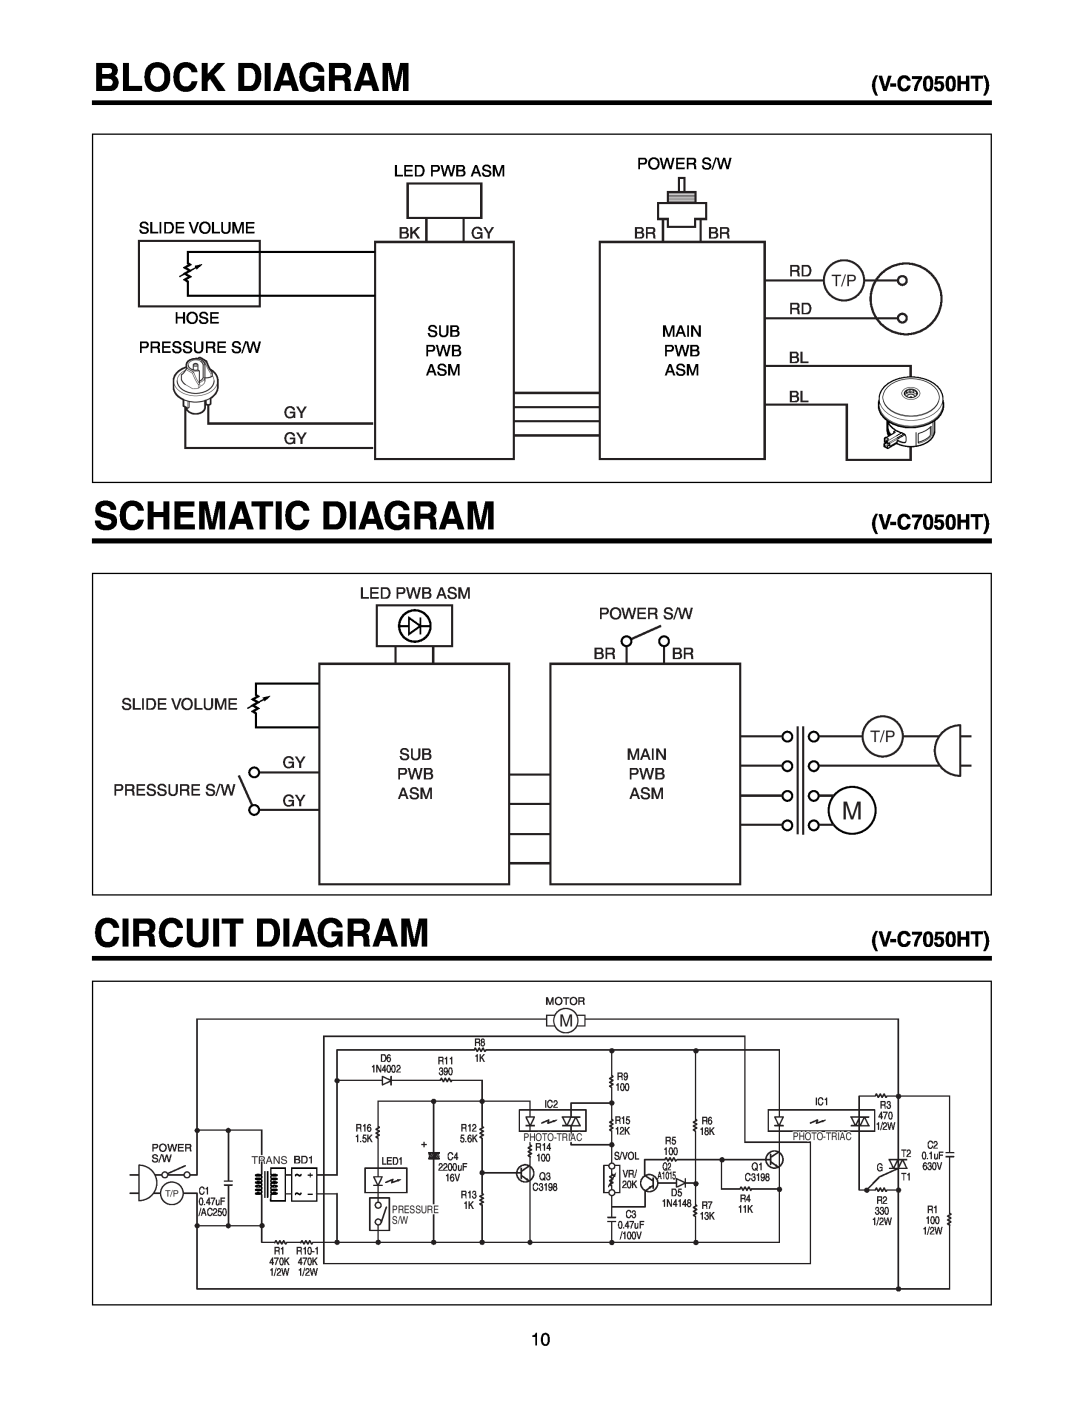 LG Electronics V-C7050HT, V-C7070CT, V-C7070CP, V-C7050NT service manual Schematic Diagram, Block Diagram, Circuit Diagram 